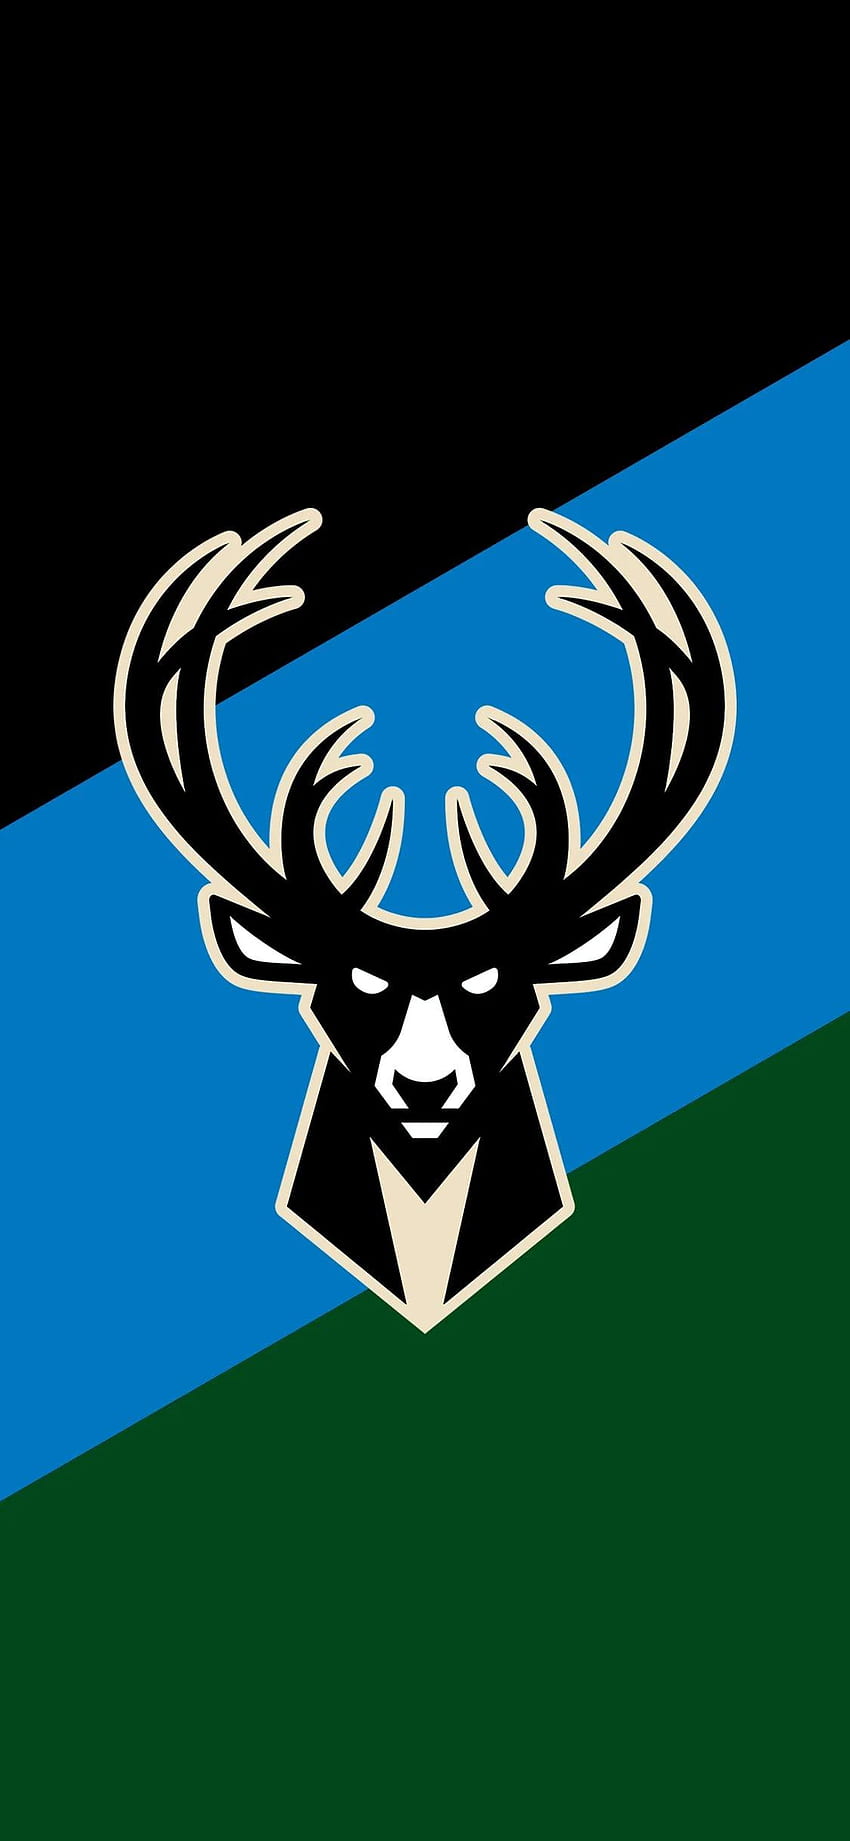 Logotipo de los Bucks de Milwaukee iPhone fondo de pantalla del teléfono